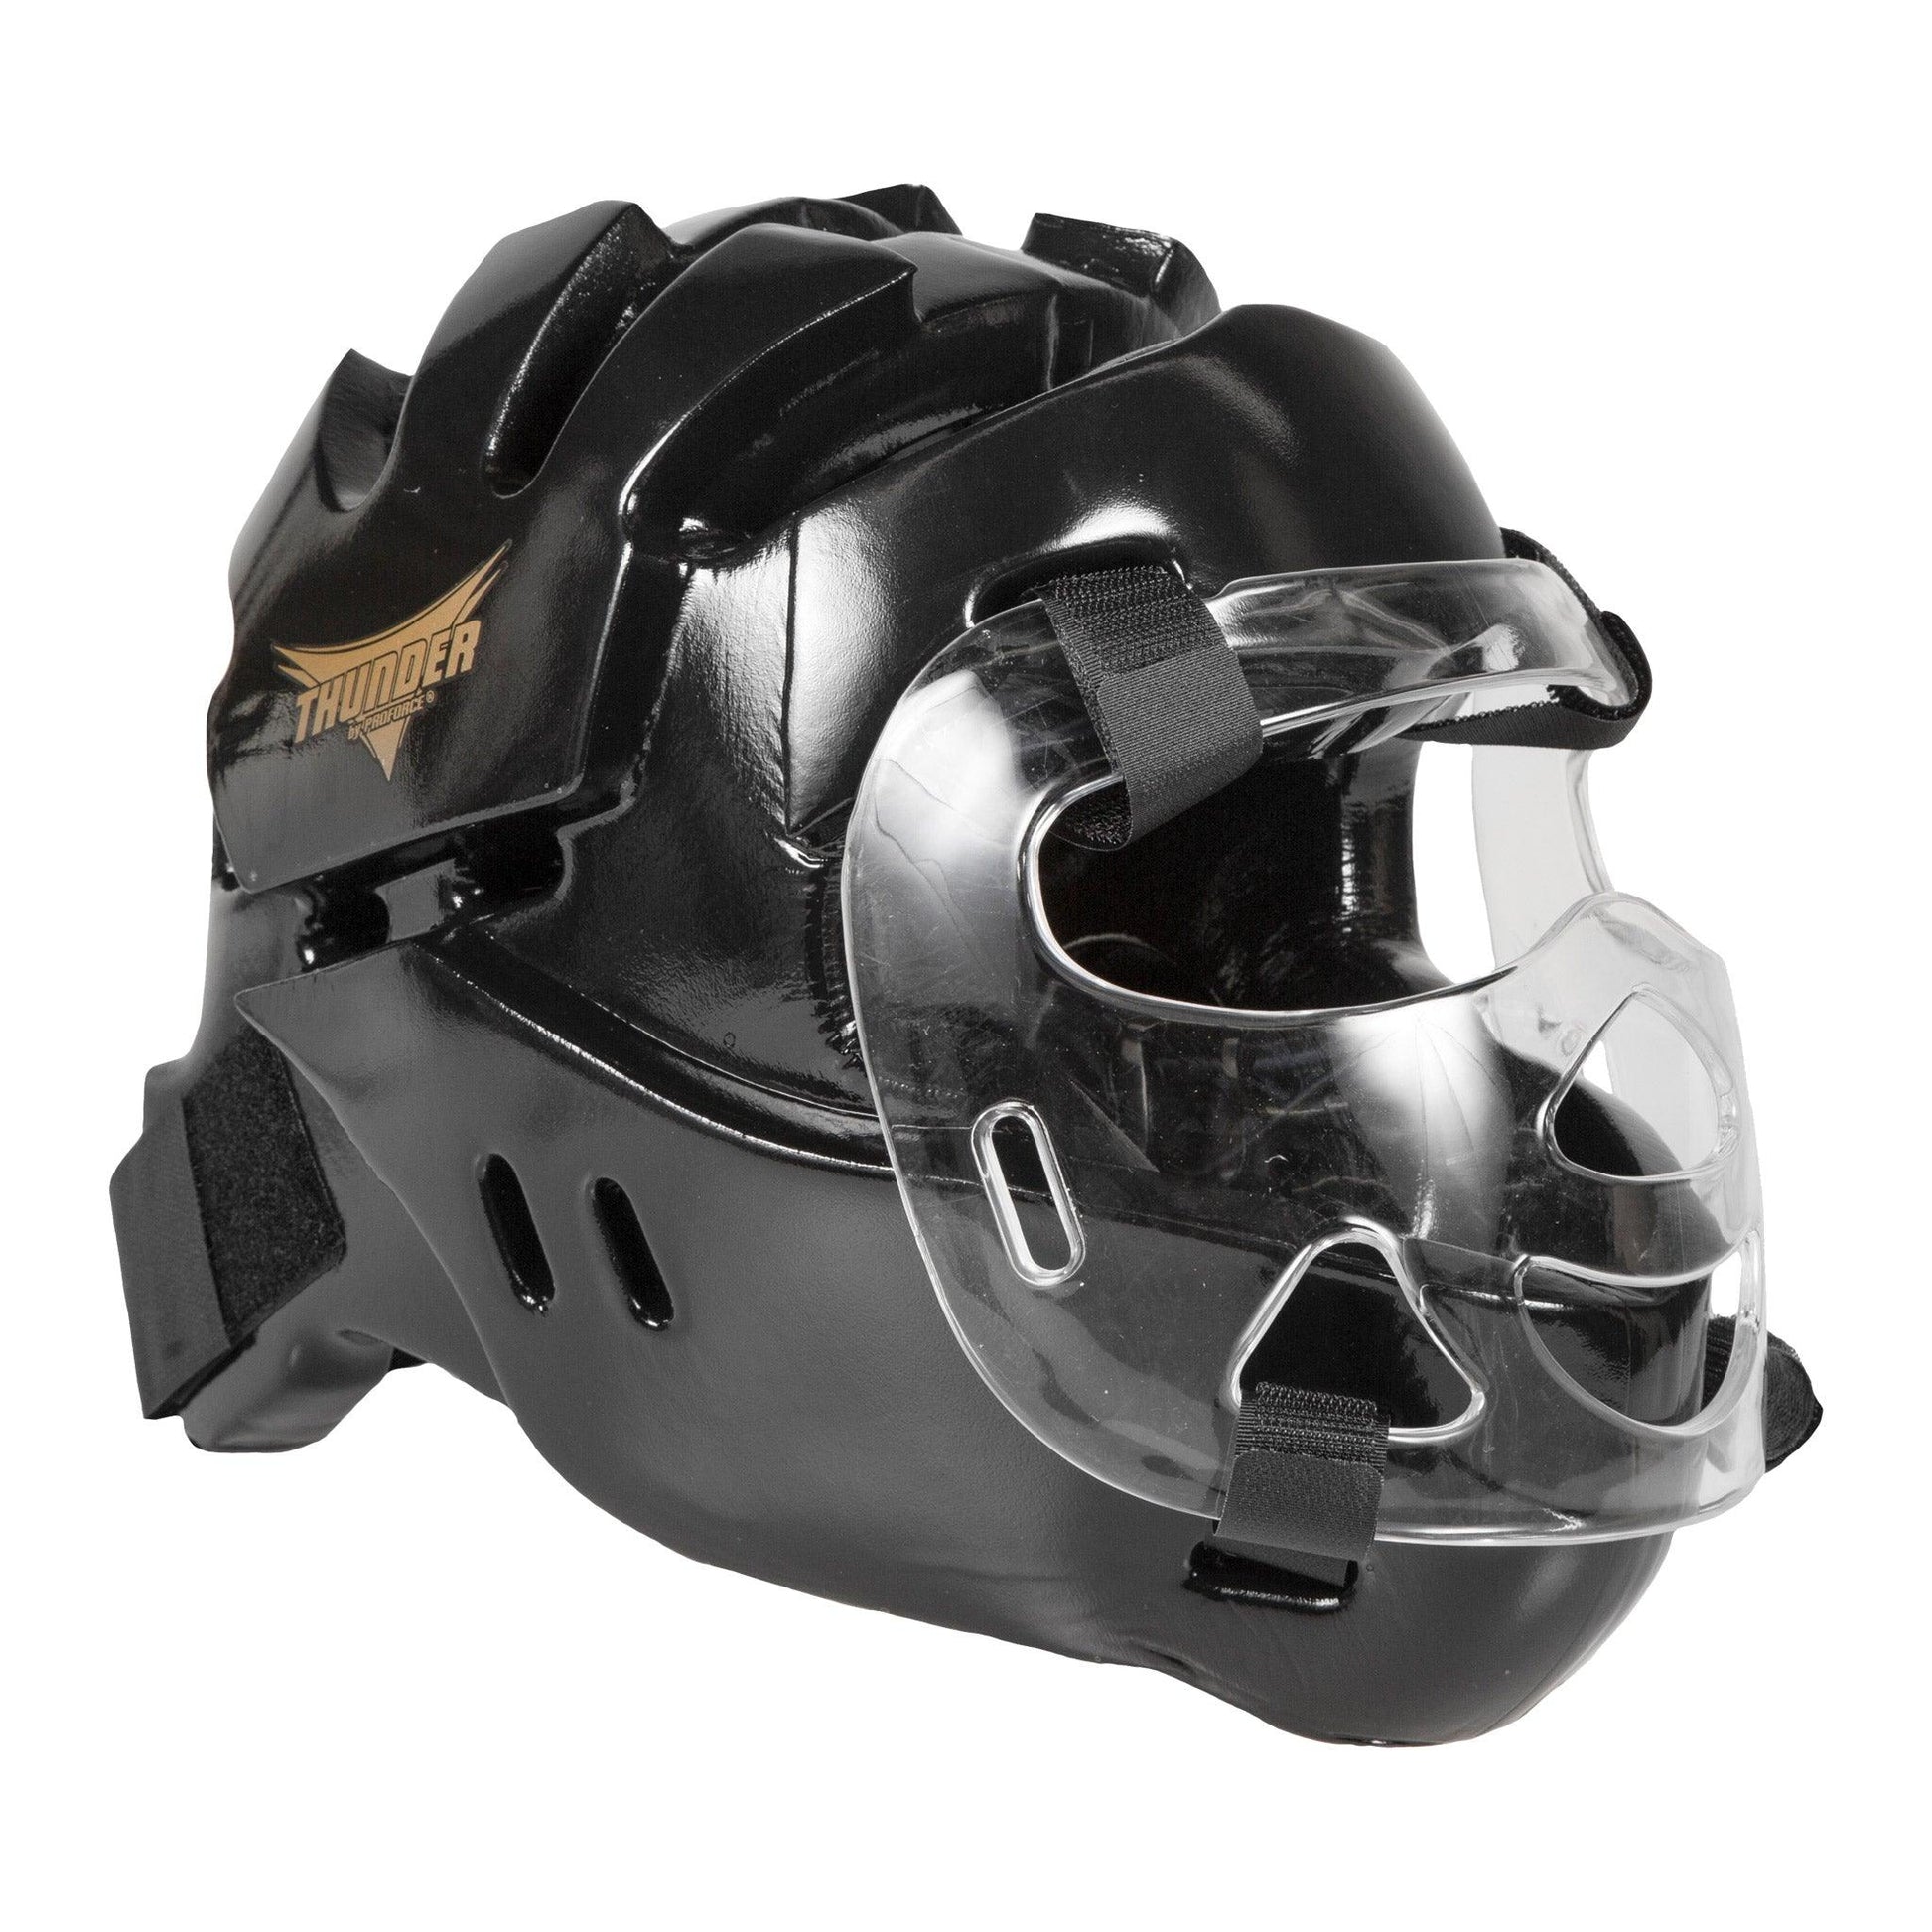 ProForce Thunder Full Headgear w/ Shield - Violent Art Shop